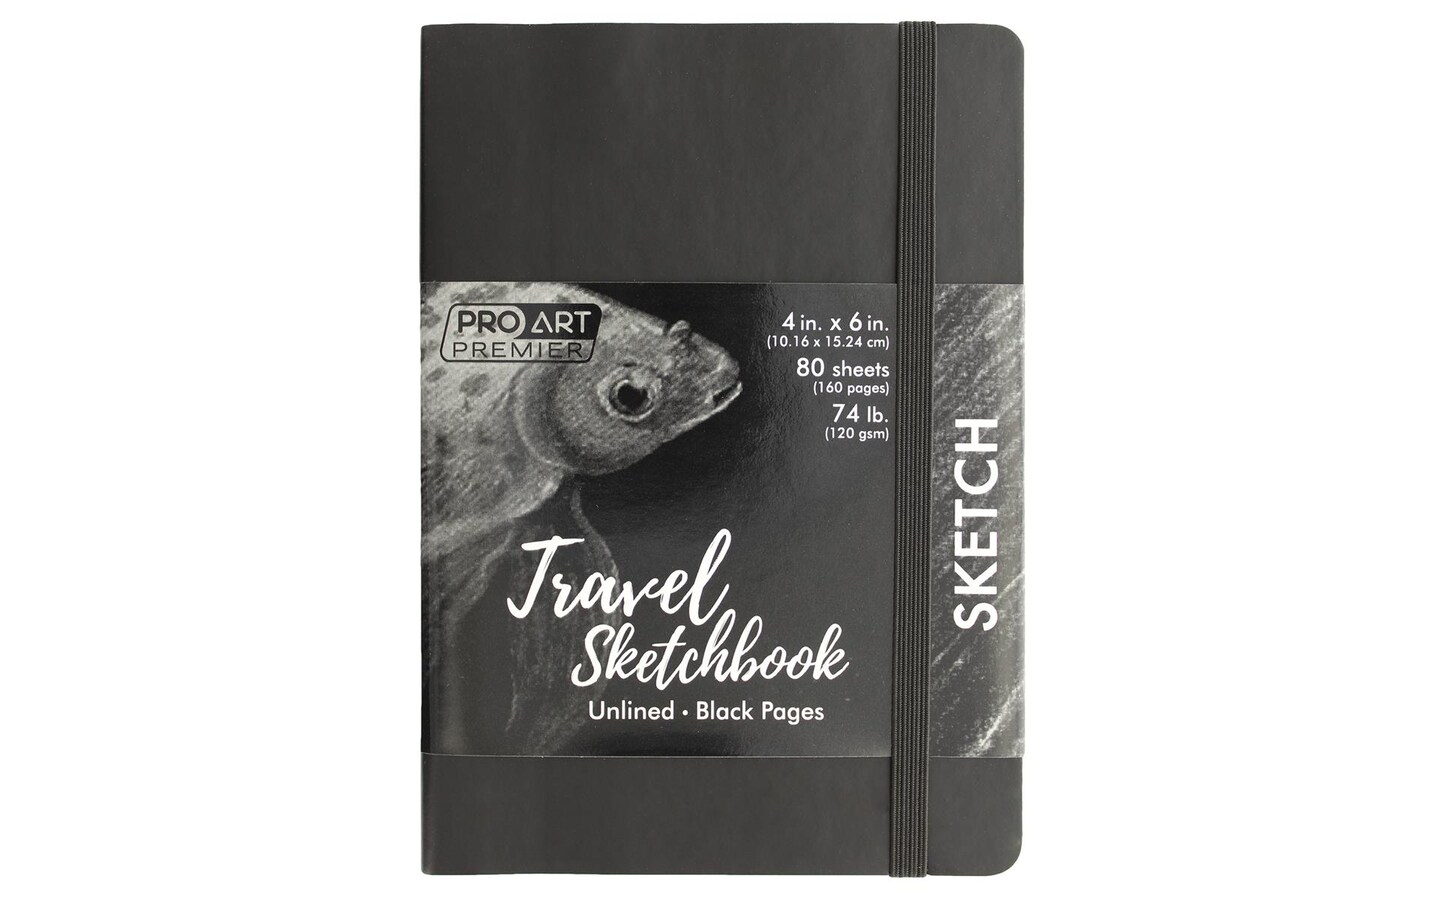 Pro Art Premier Sketch Book Travel 6x 4 Black 74lb Black 80